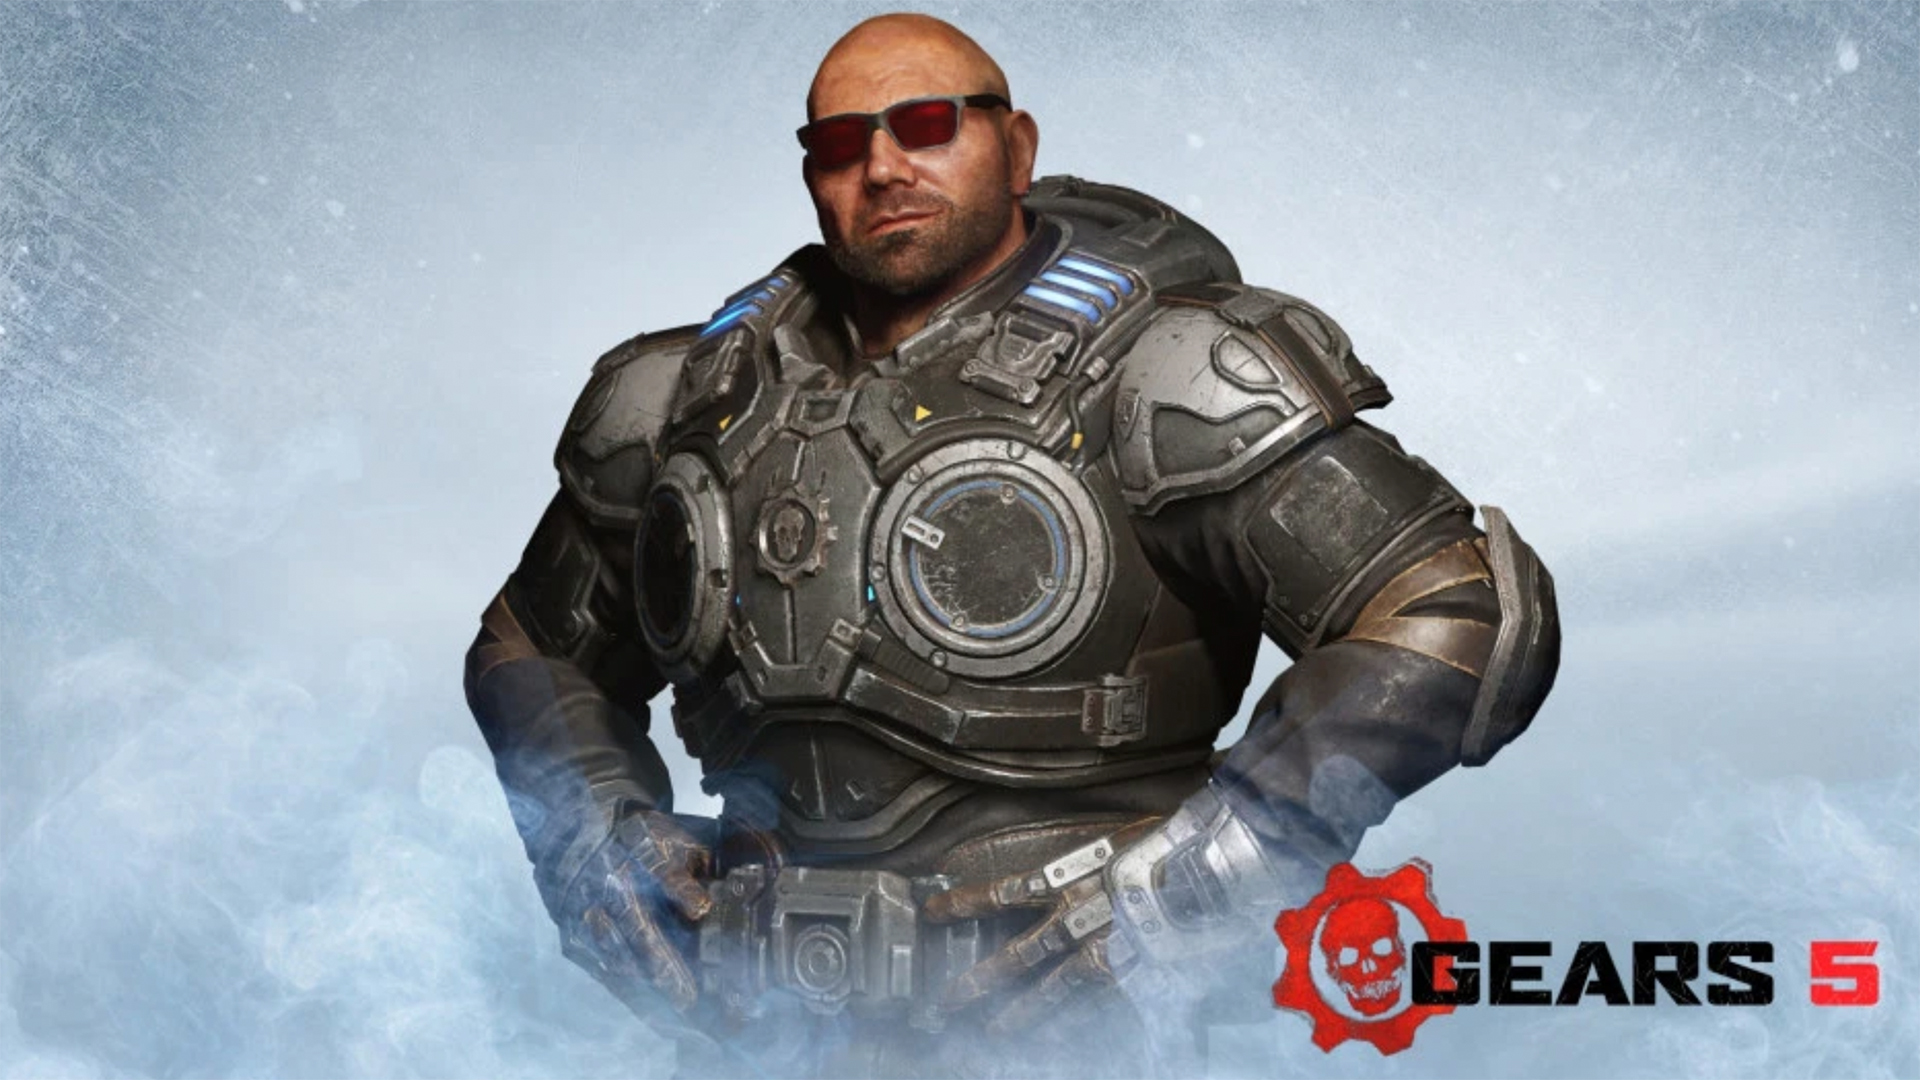 Gears 5 unlockable characters: How to get Batista in Gears 5, plus